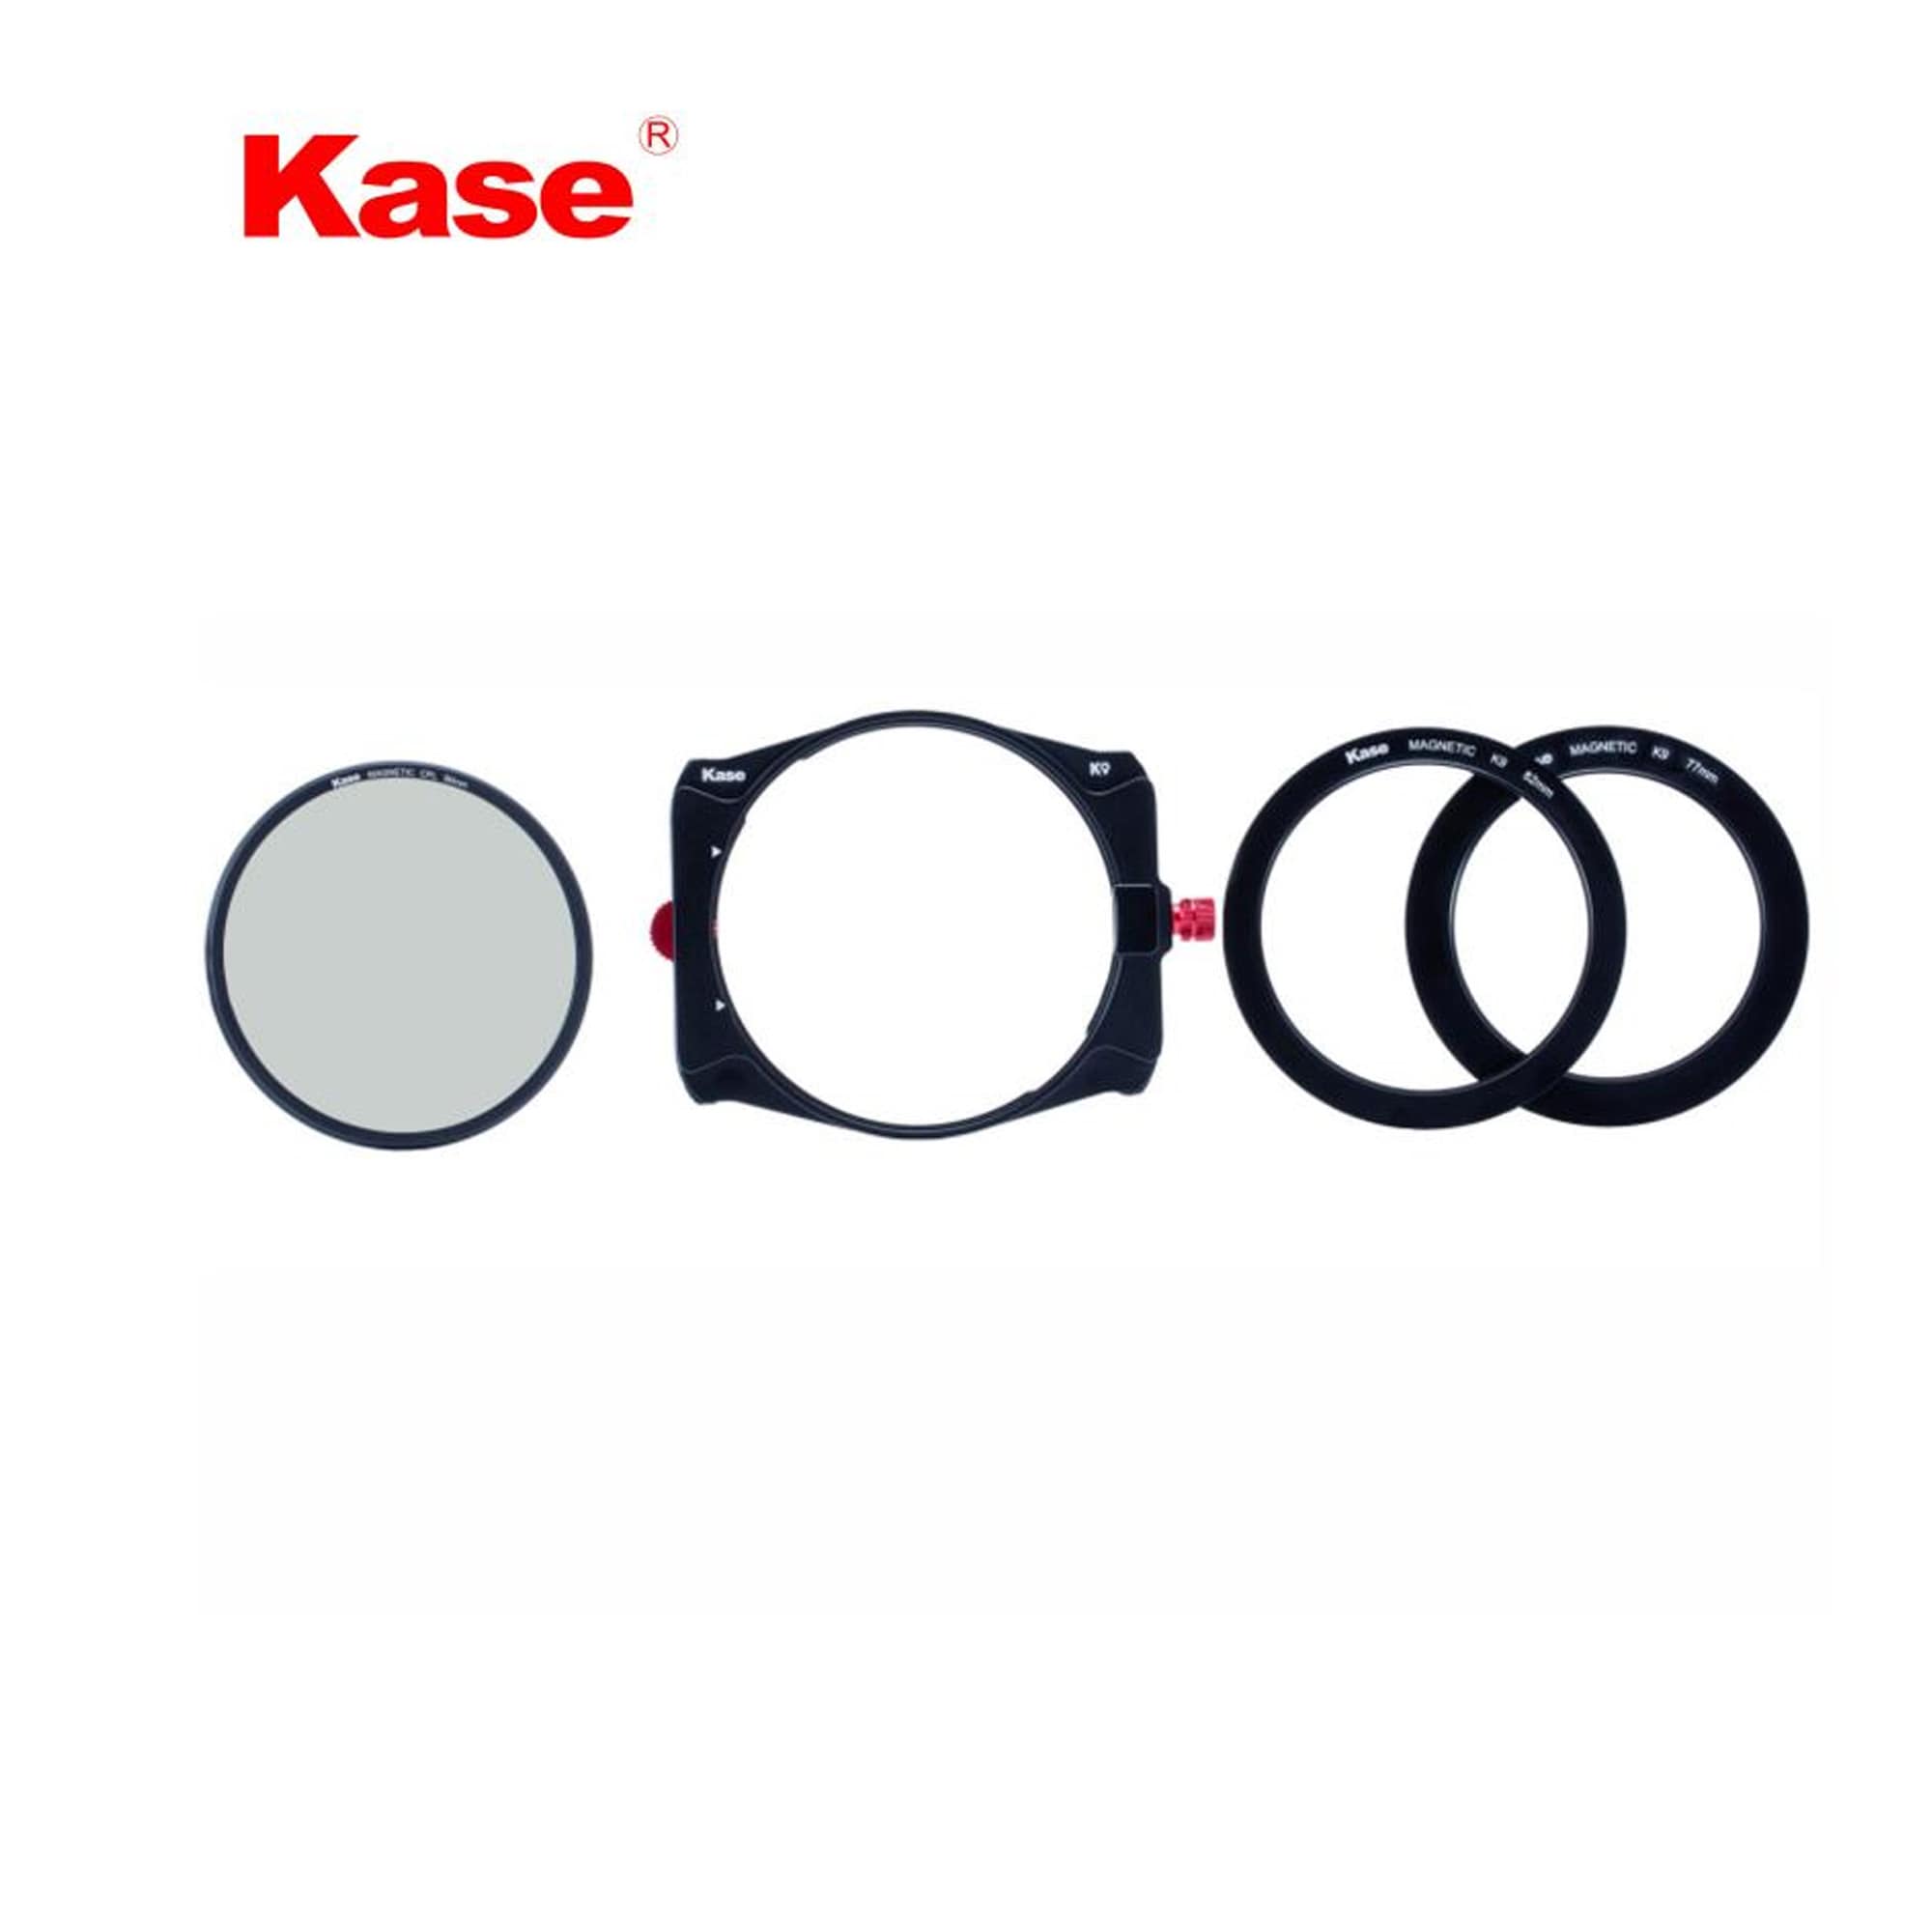 Kase K9 Wolverine Series Entry Start Kit 100mm